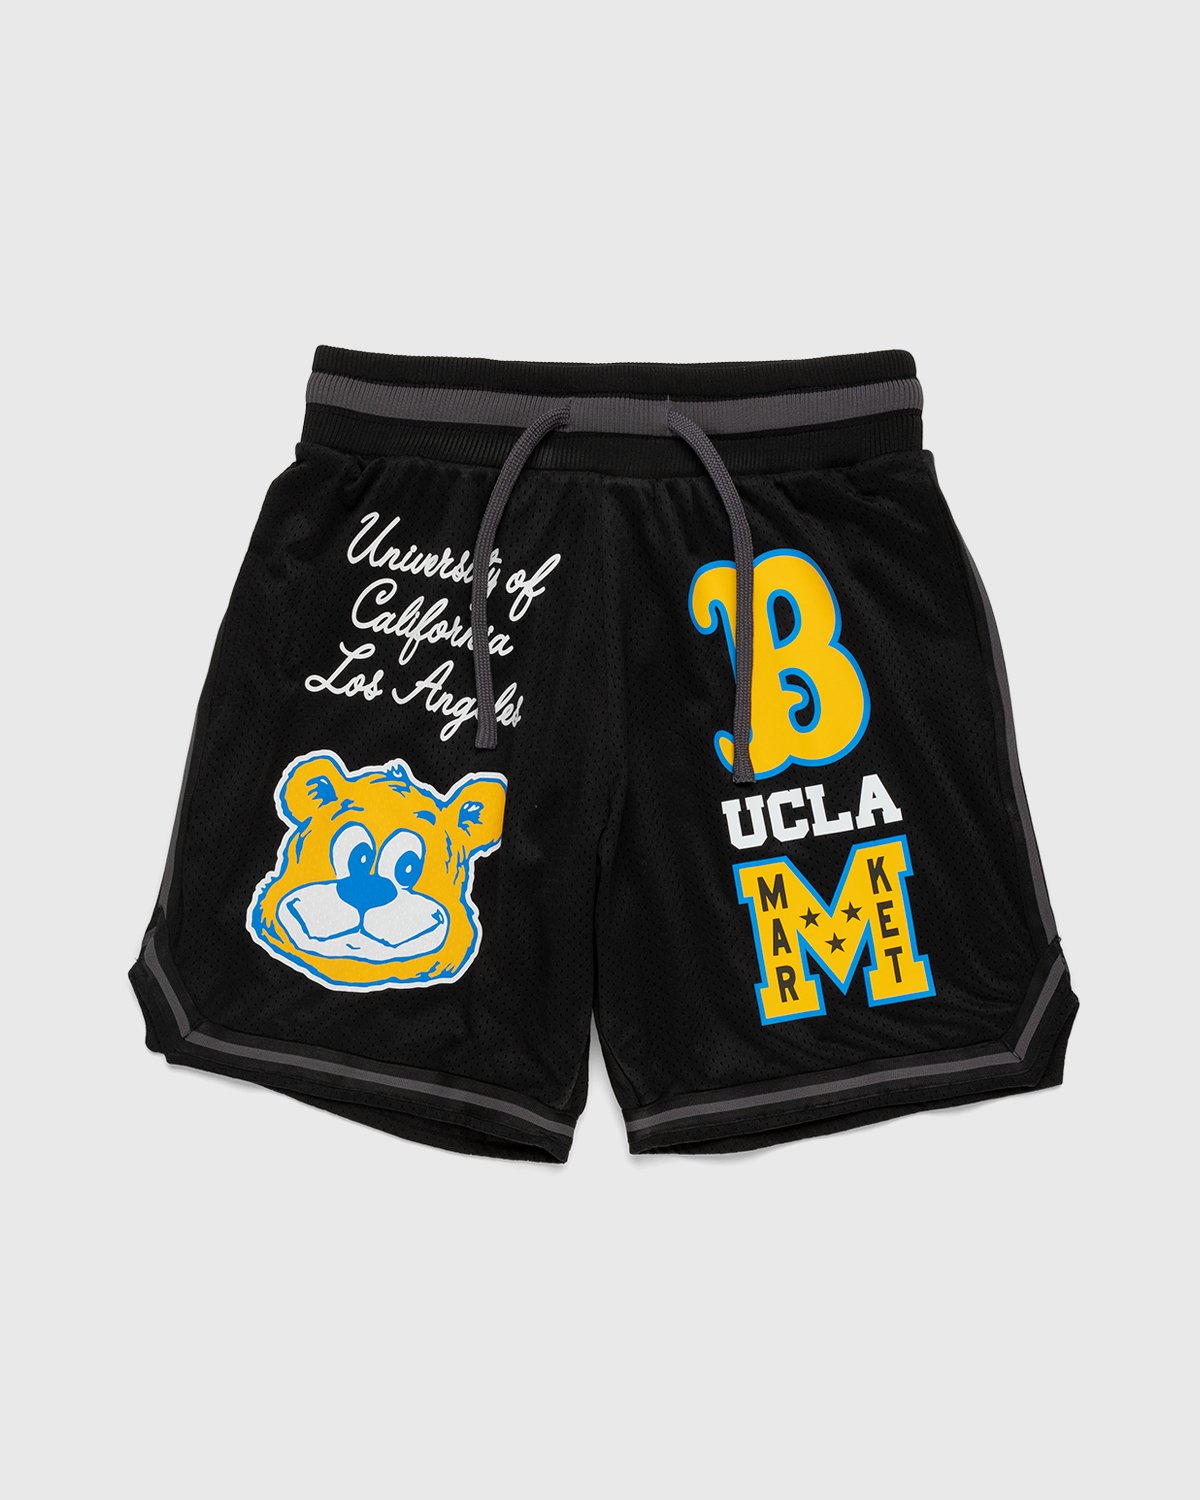 Market x UCLA x Highsnobiety - HS Sports Mesh Bruin Shorts Black - Clothing - Black - Image 1